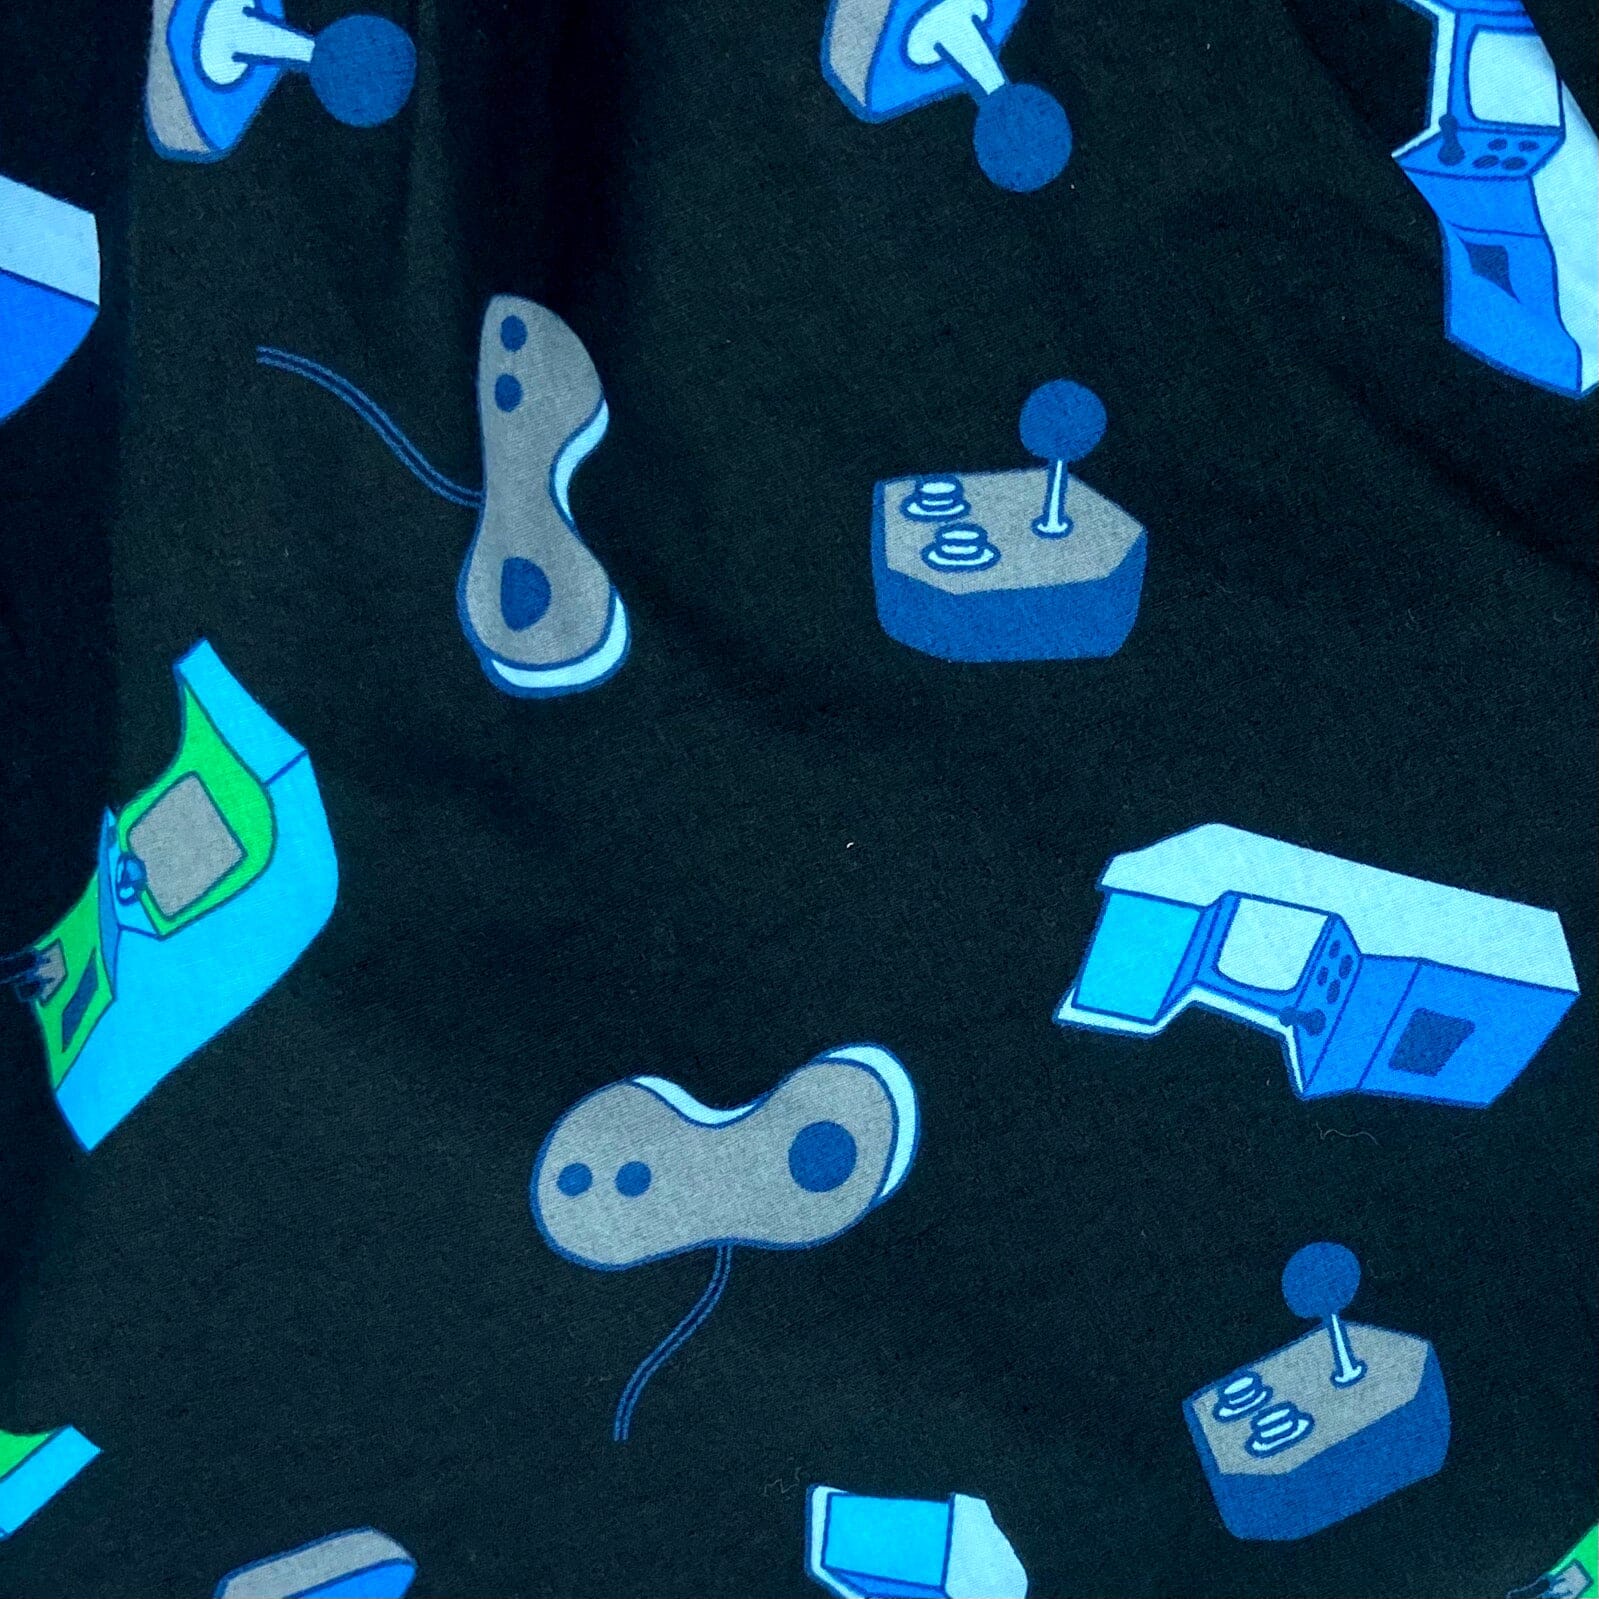 Men's Retro Arcade Themed Joystick Novelty Print Cotton Boxer Shorts